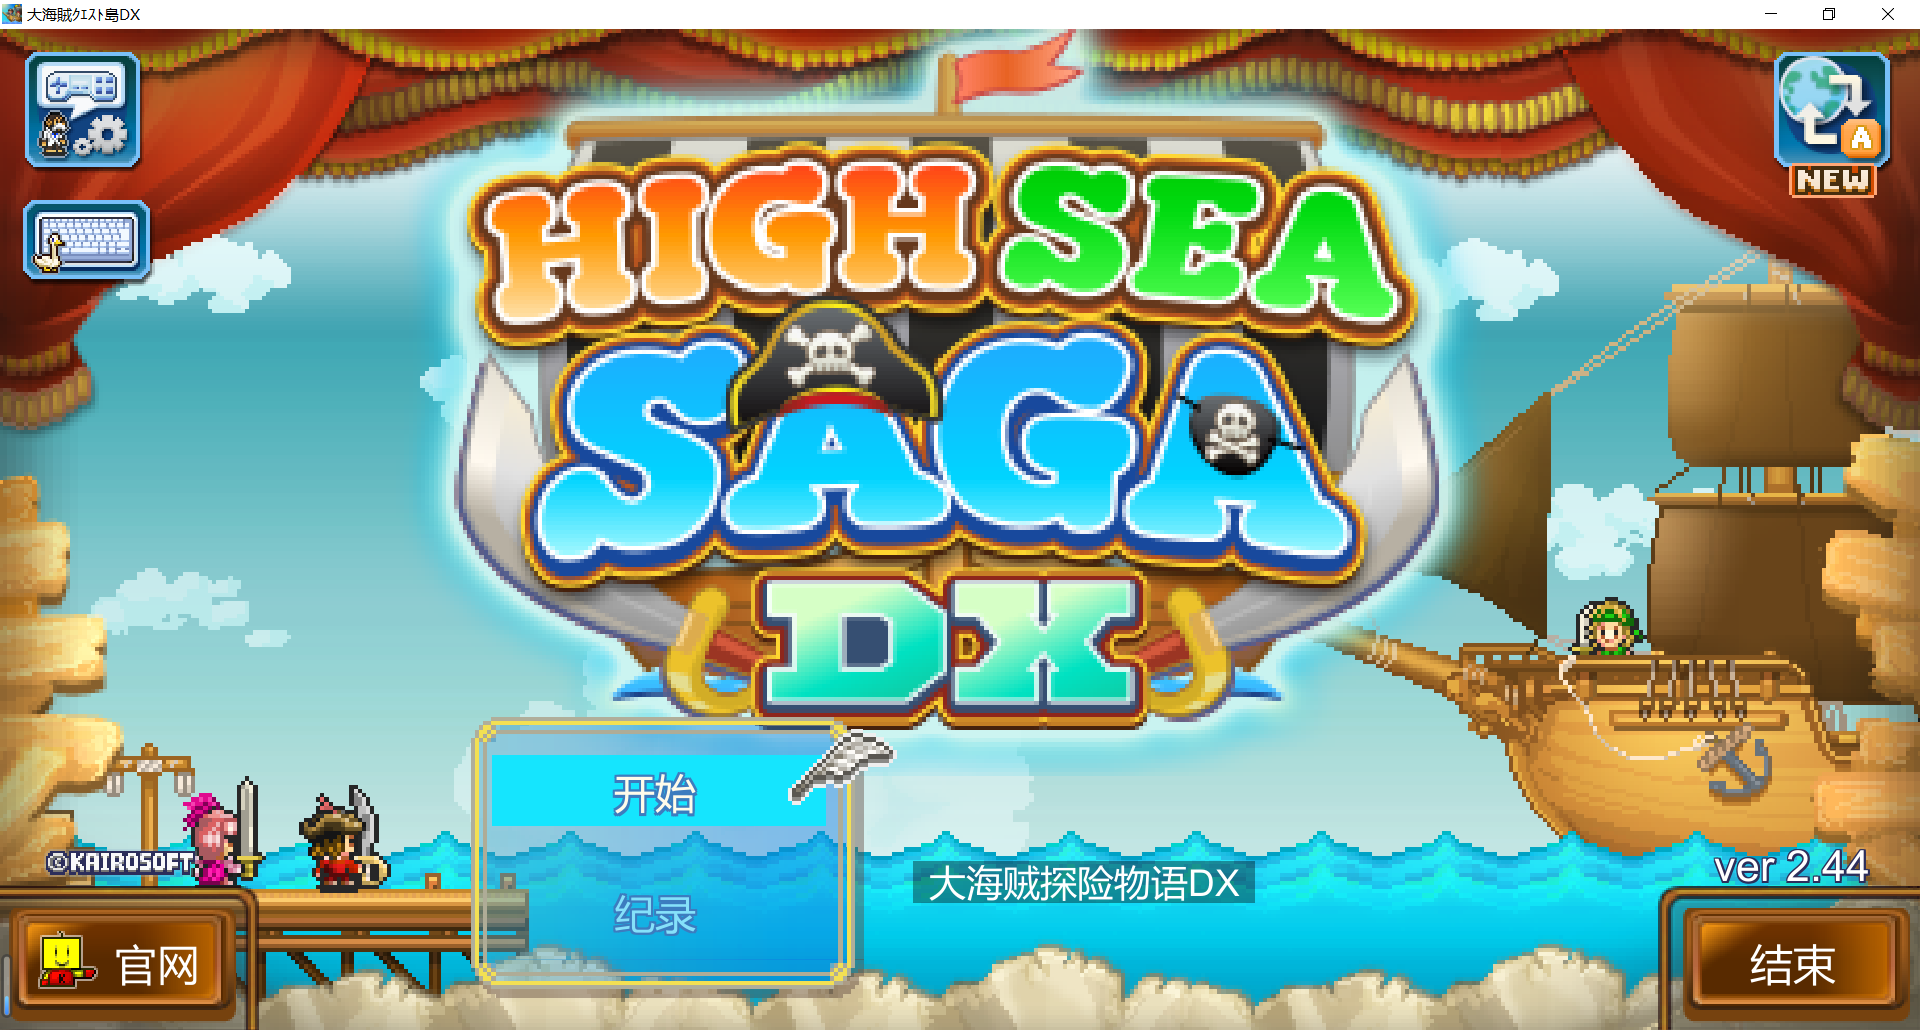 Windows High Sea Saga DX 大海贼探险物语DX